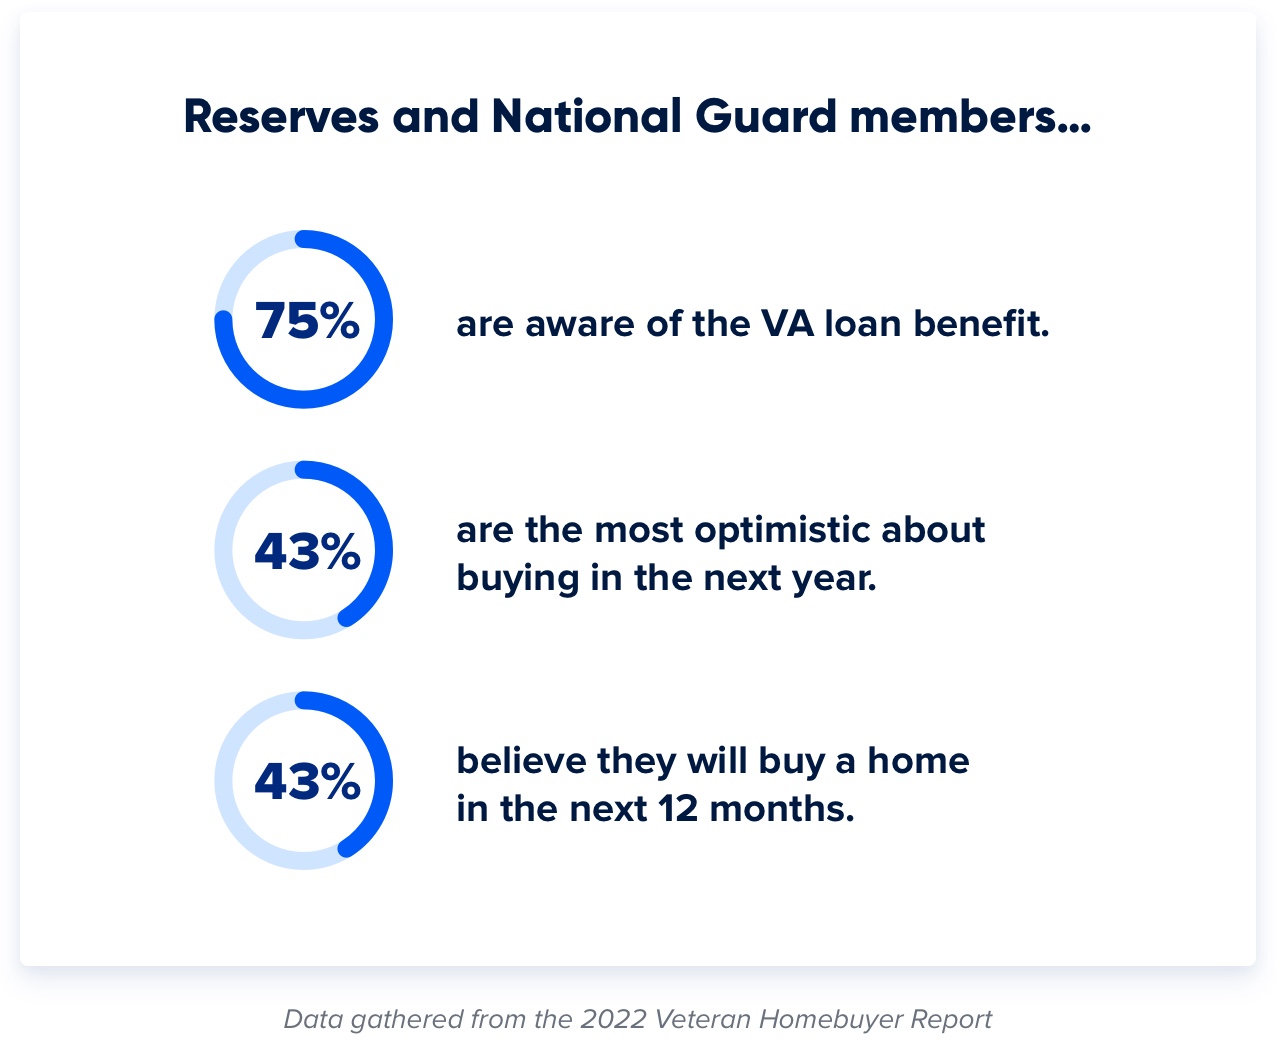 Reserves and National Guard member VA loan awareness and usage statistics